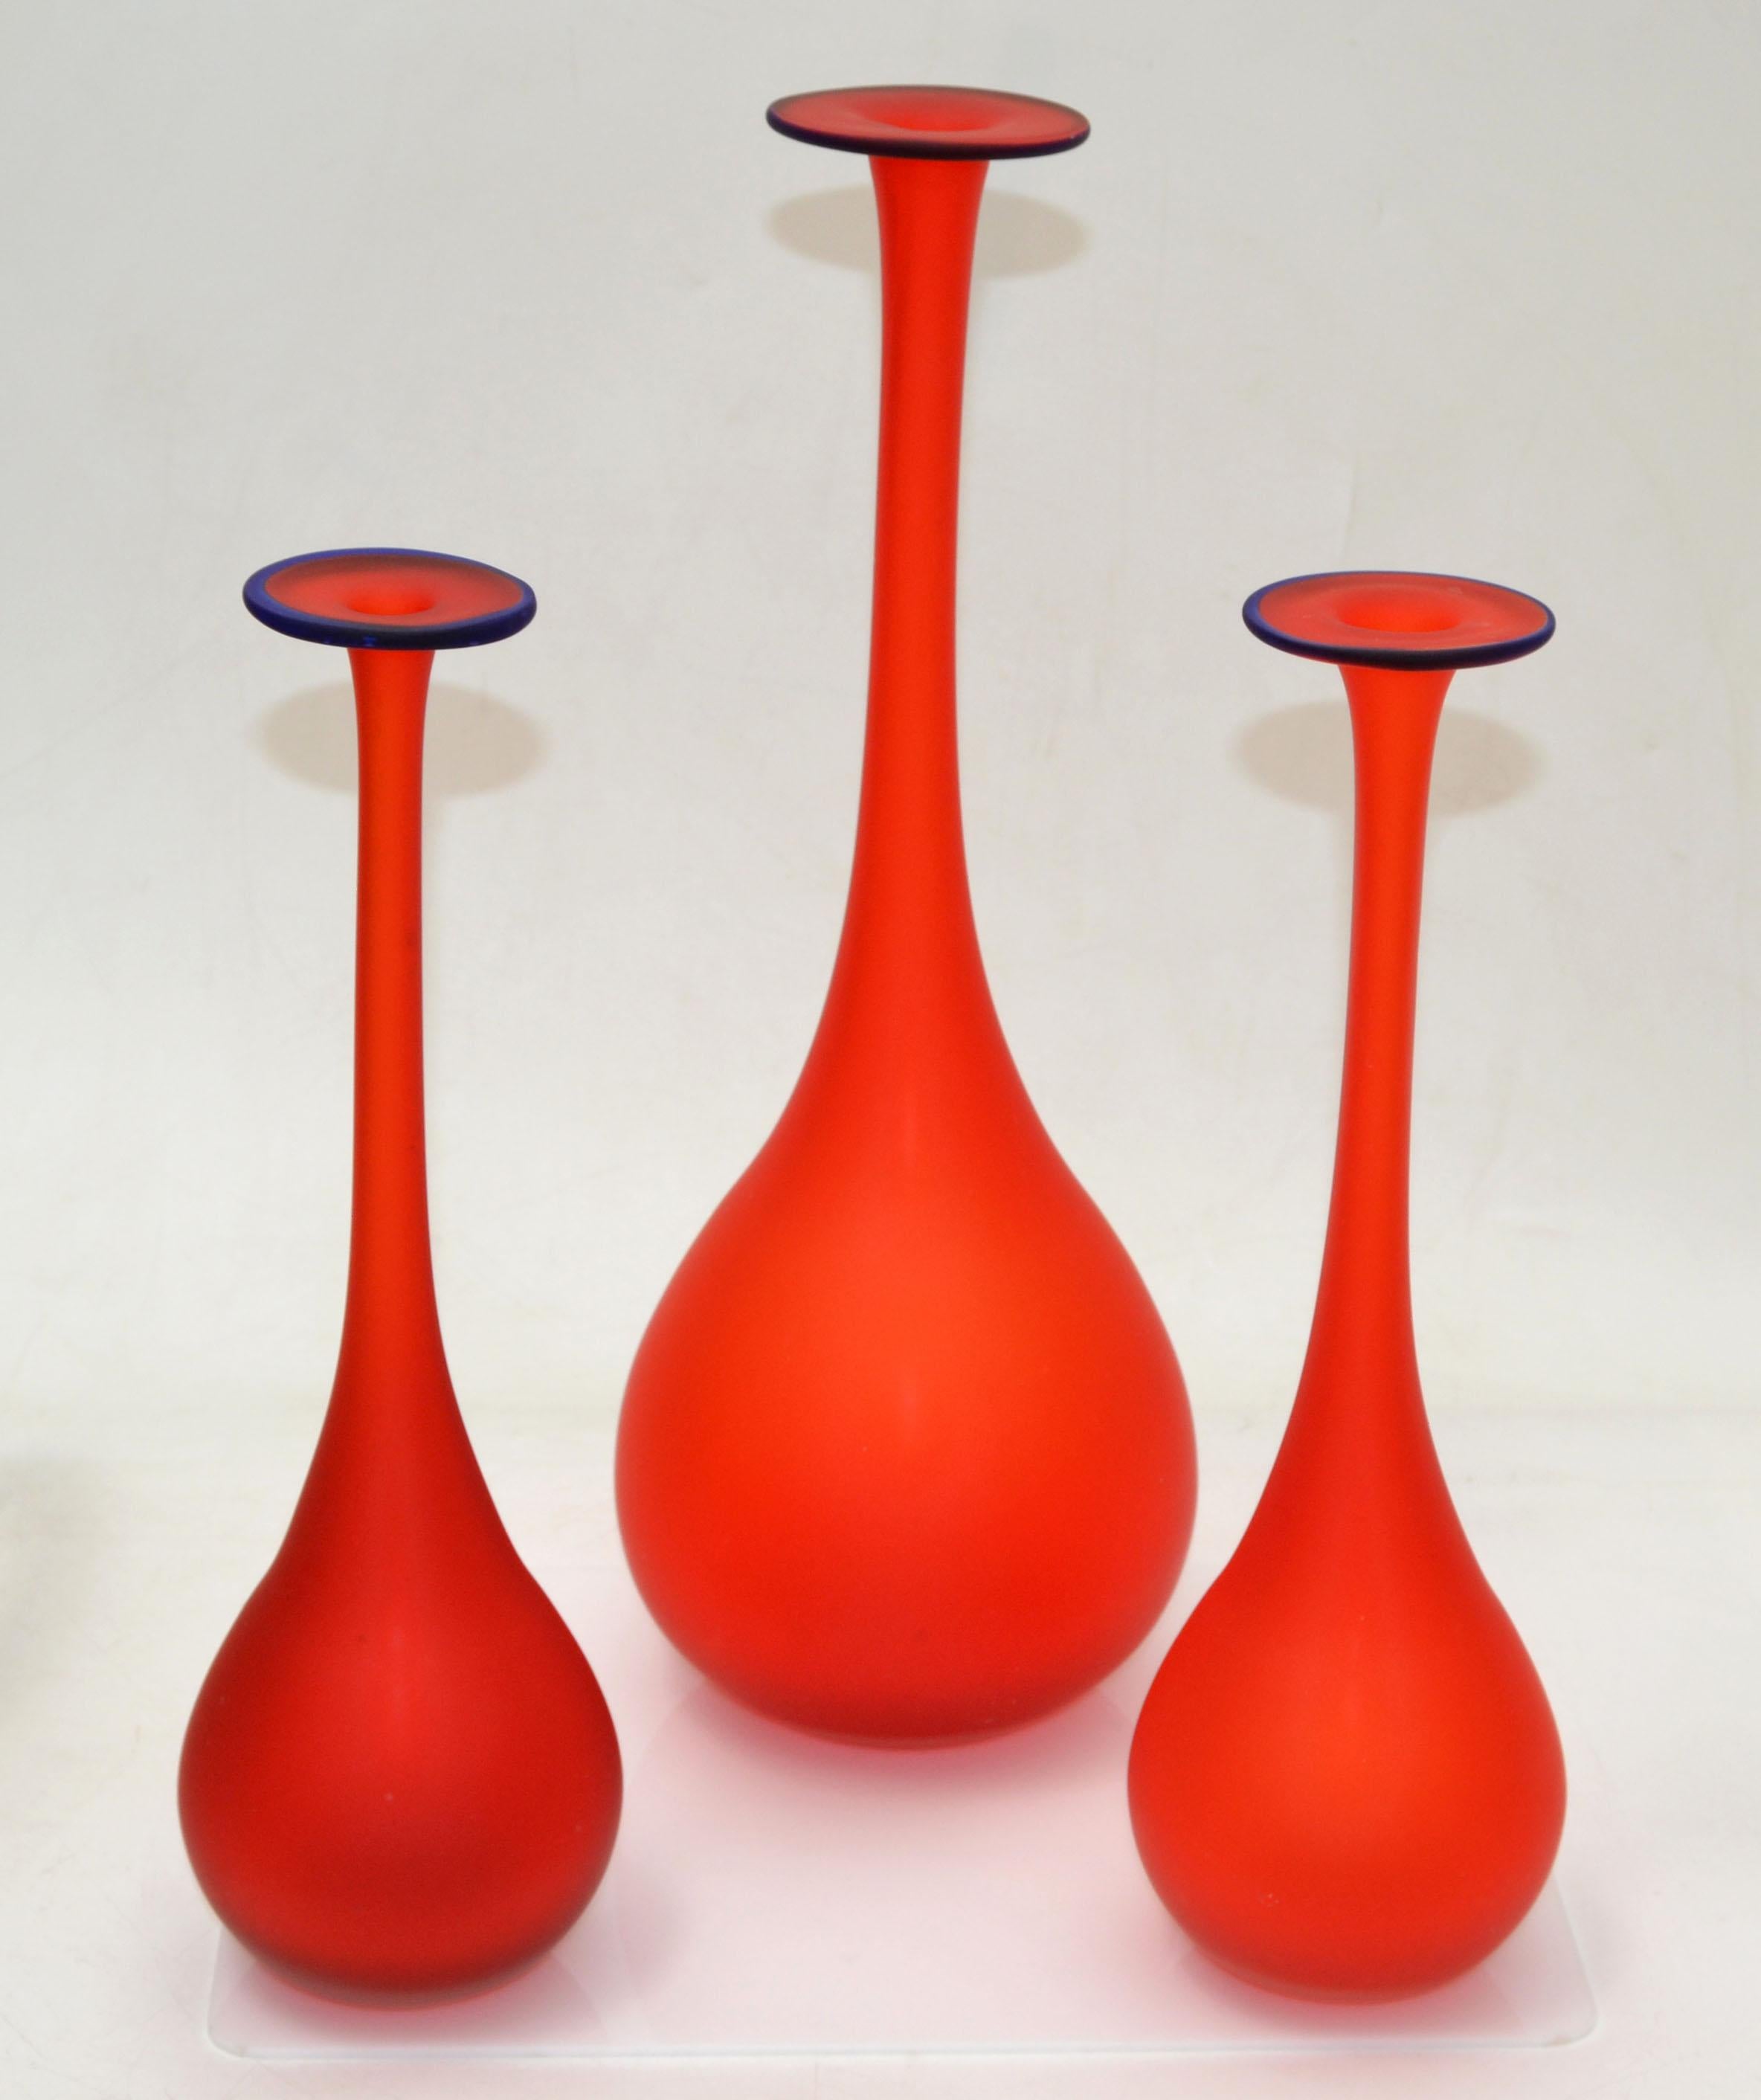 3 Nesting Vases Moretti Style Translucent Red & Blue Satin Glass Bud Vases Italy For Sale 4